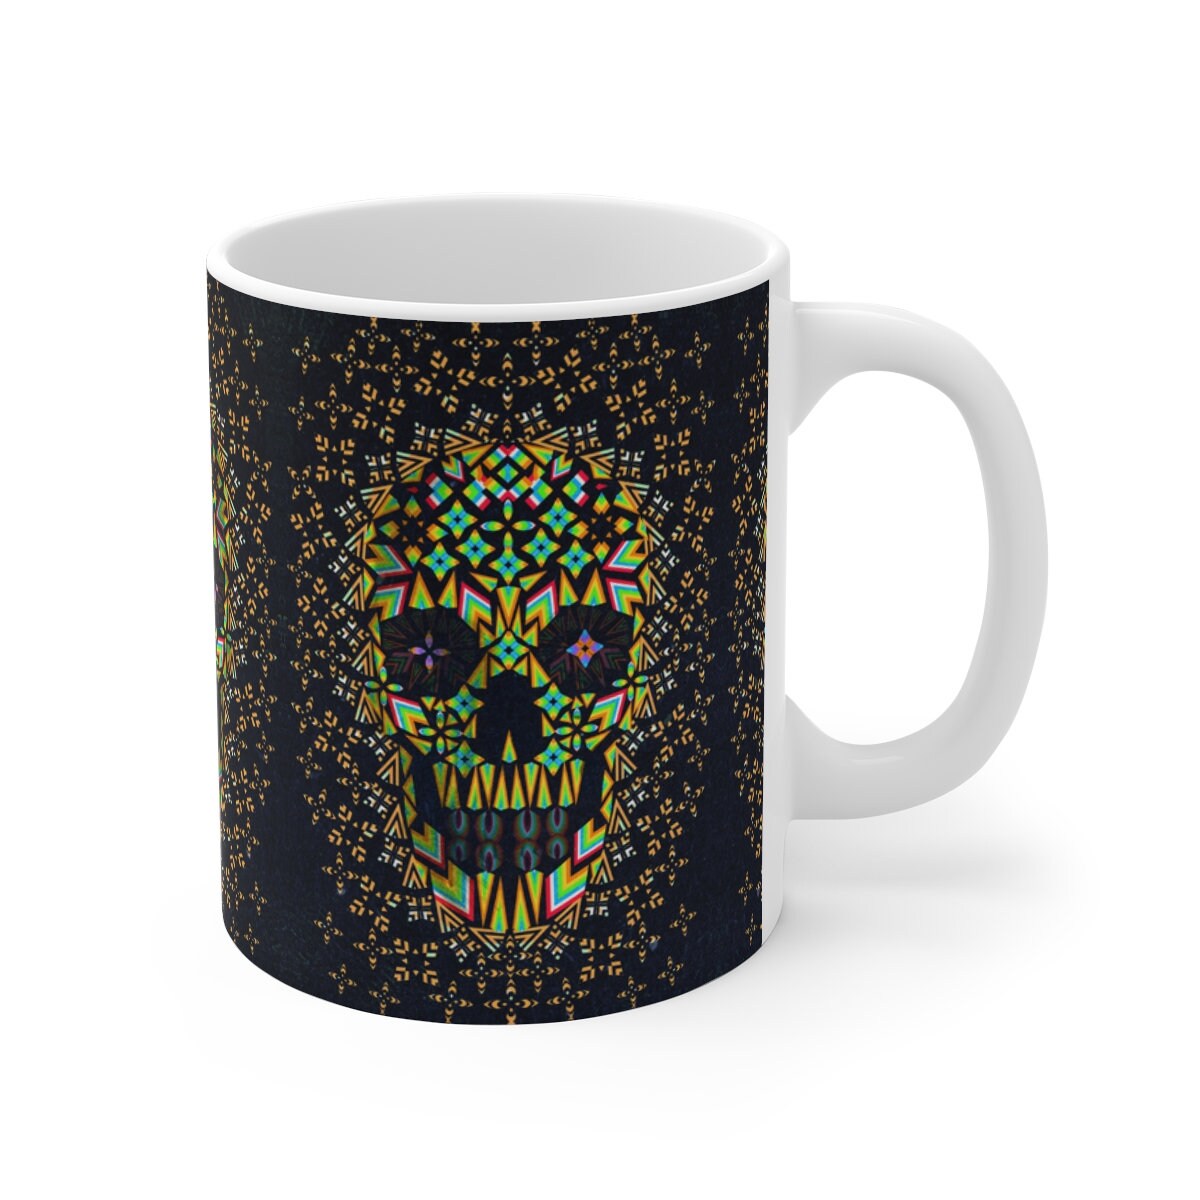 Skull Mug Gift, Colorful Sugar Skull Mug, Abstract Skull Ceramic Coffee Mug, Gothic Skull Mug, Sugar Skull Art Gothic Kitchenware Gift